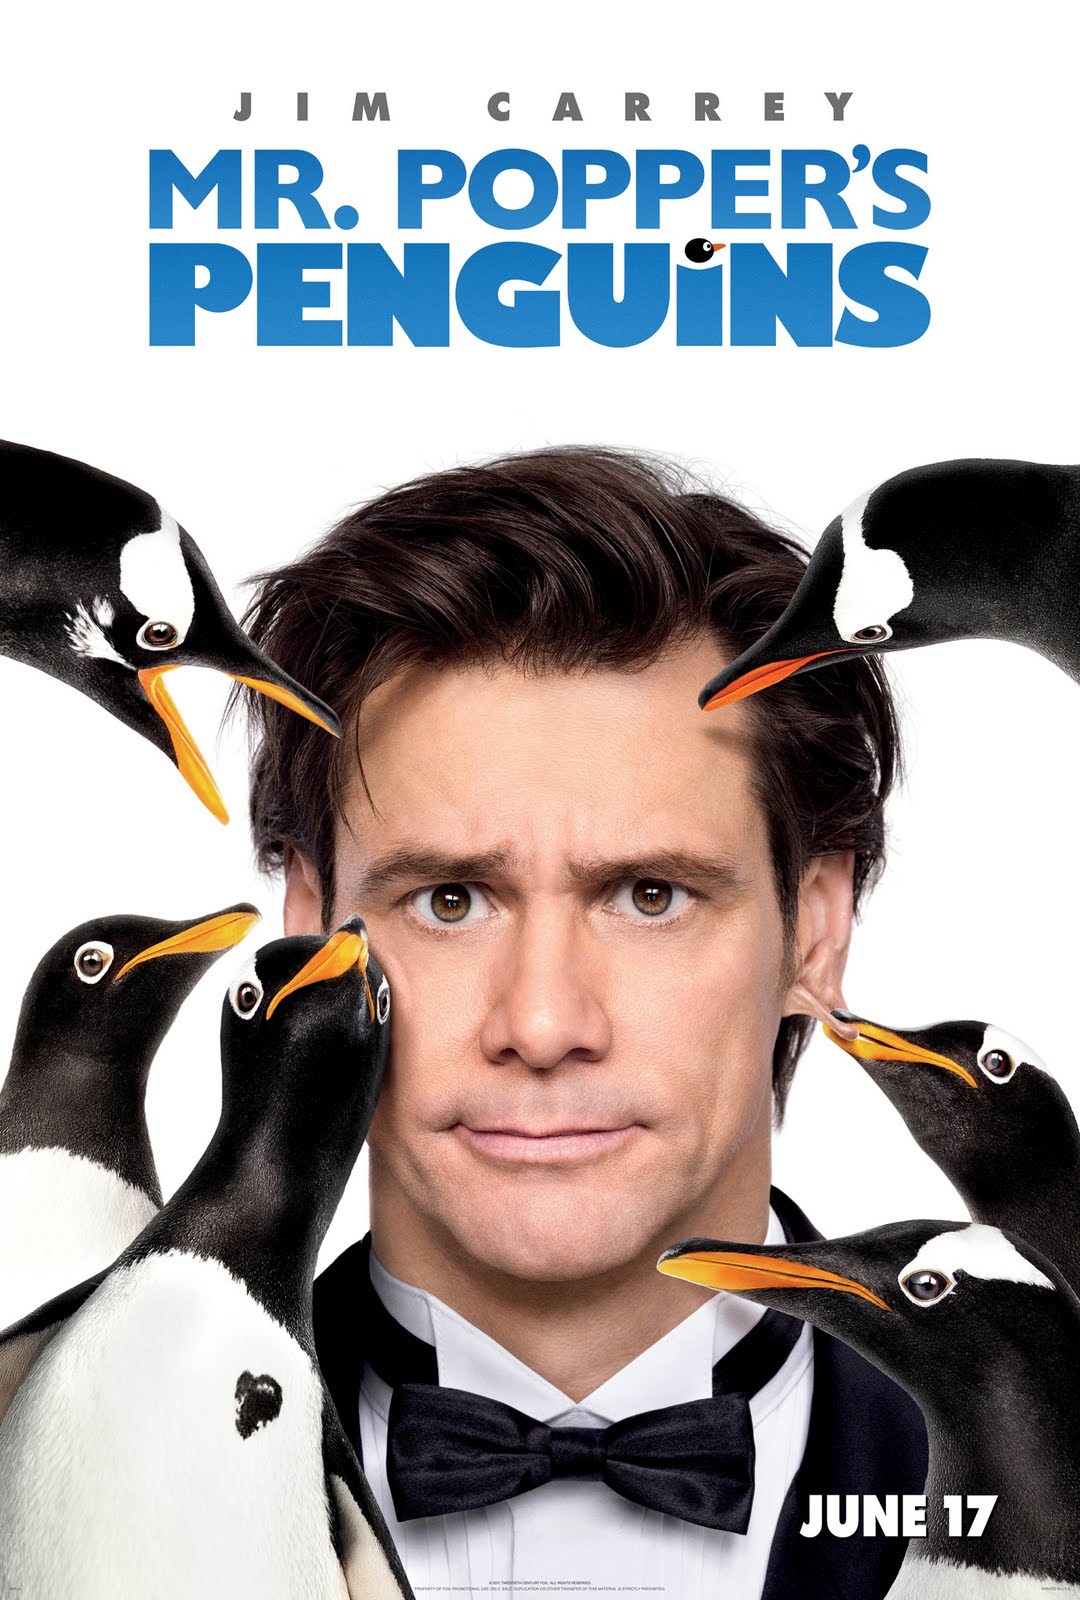 http://4.bp.blogspot.com/-BFgiA8errK0/TeZivbkZevI/AAAAAAAAOLw/Bn8Q9OJwseU/s1600/mr+poppers+penguins+movie+poster.jpg